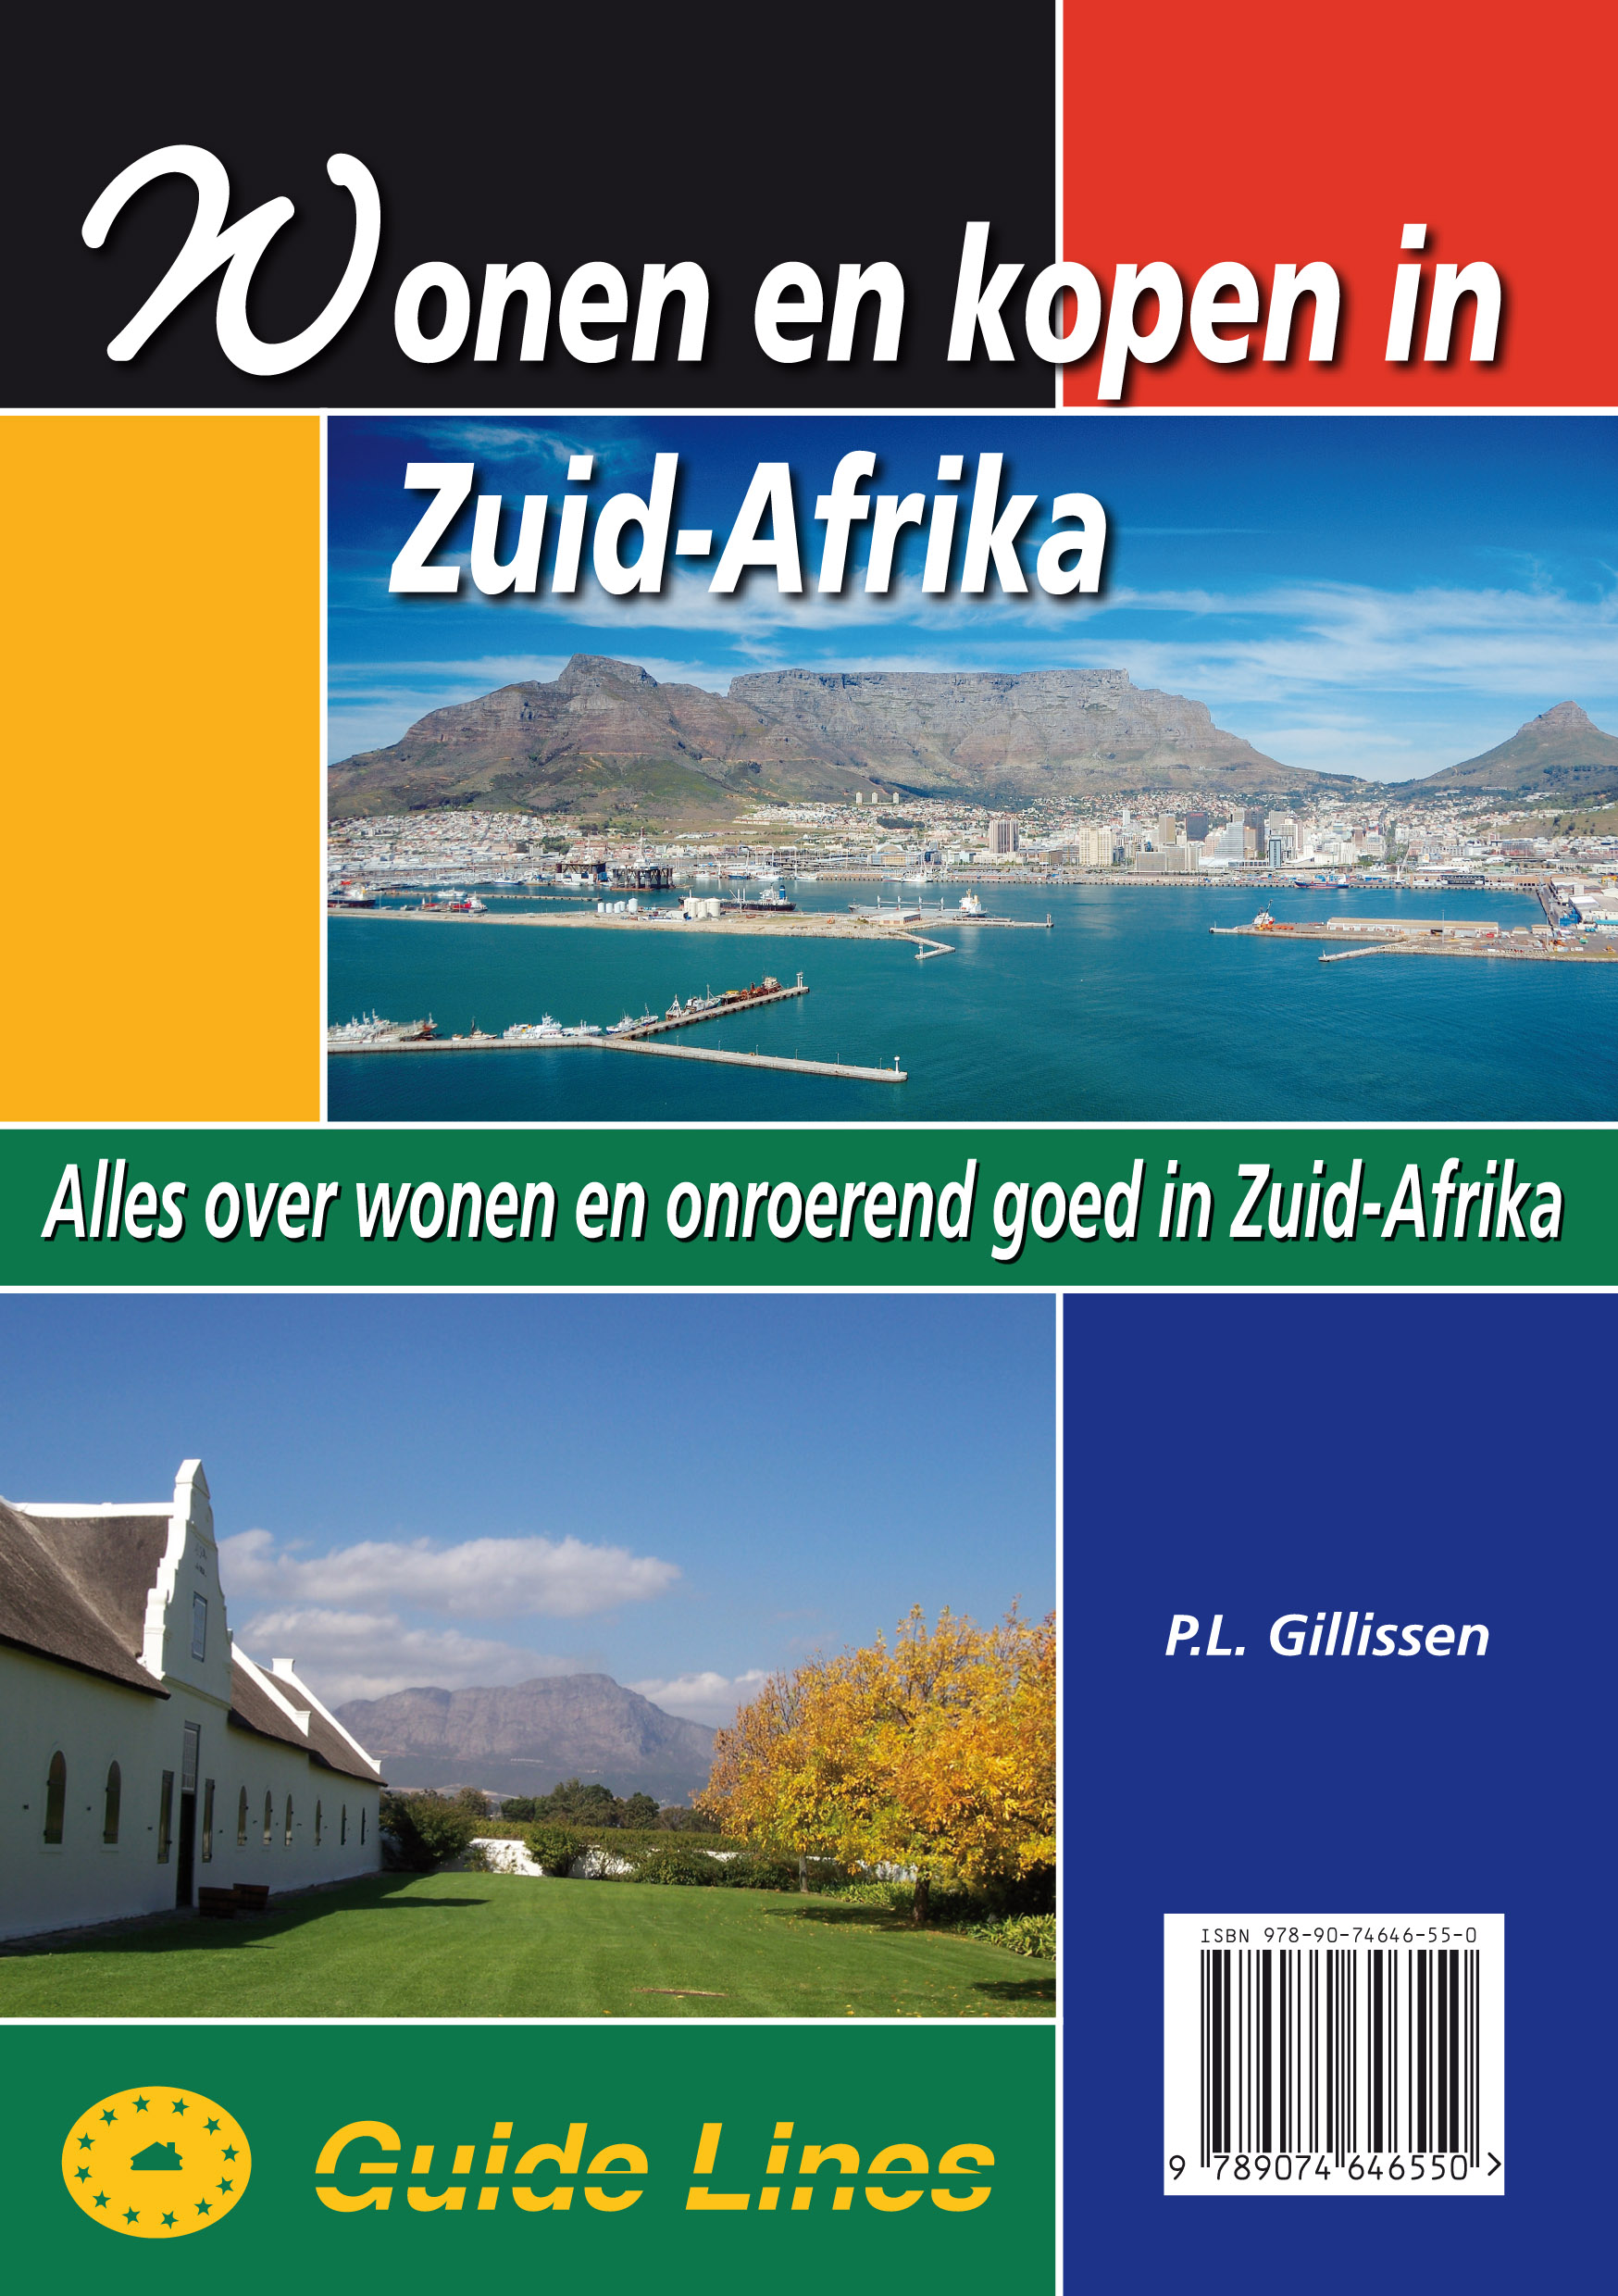 Wonen en kopen in Zuid-Afrika